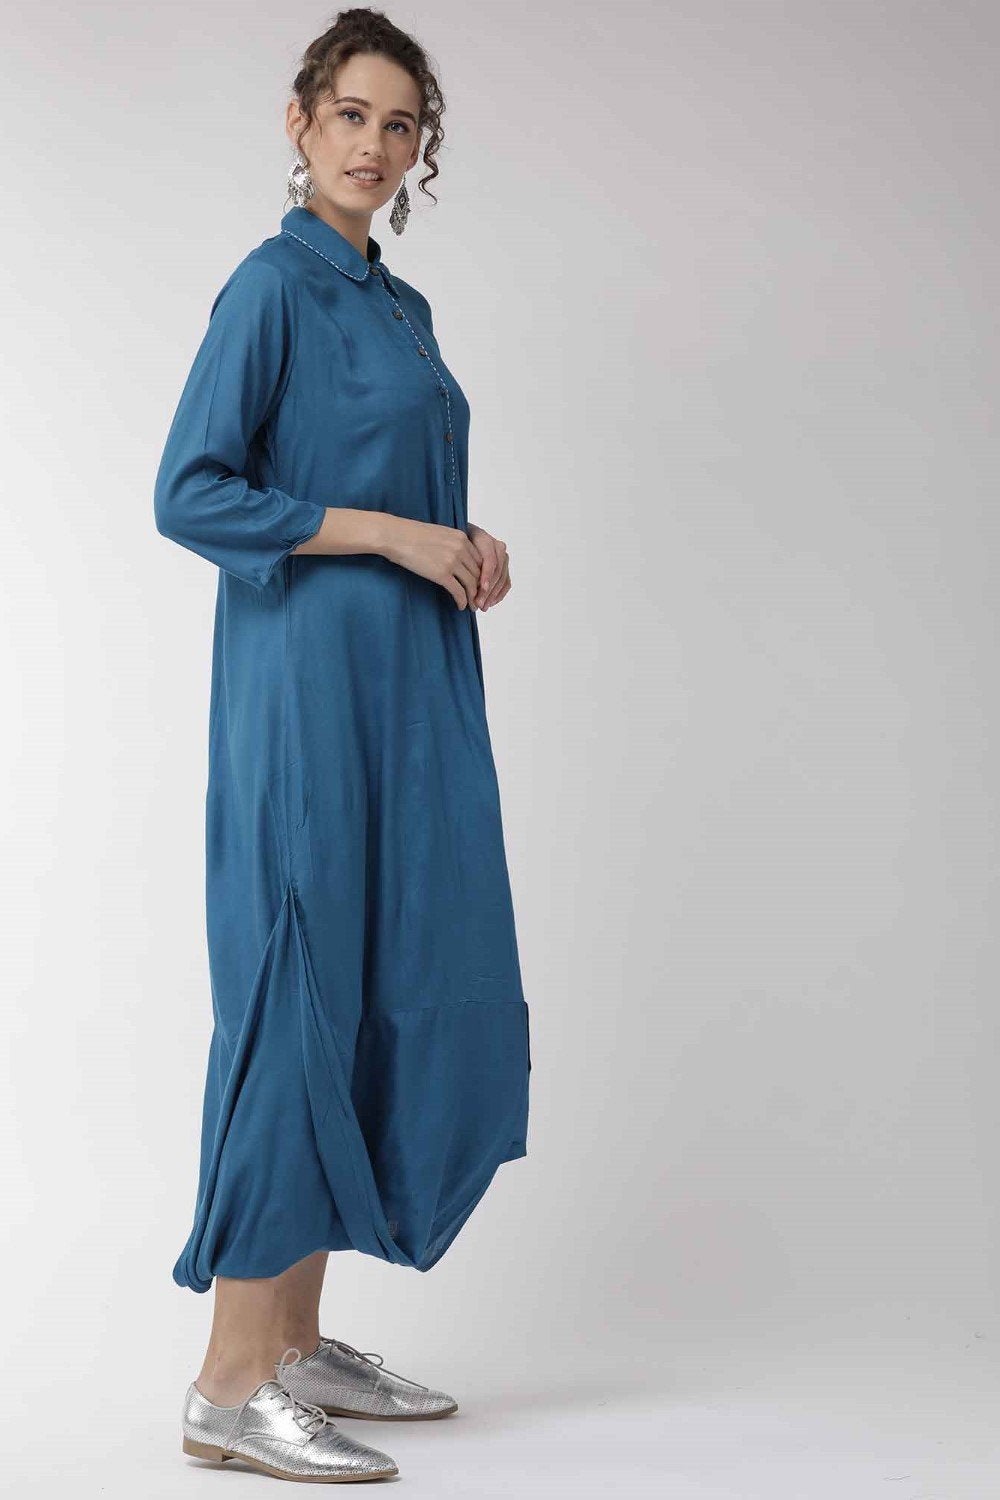 Women's Indigo Austere Dress - InWeave